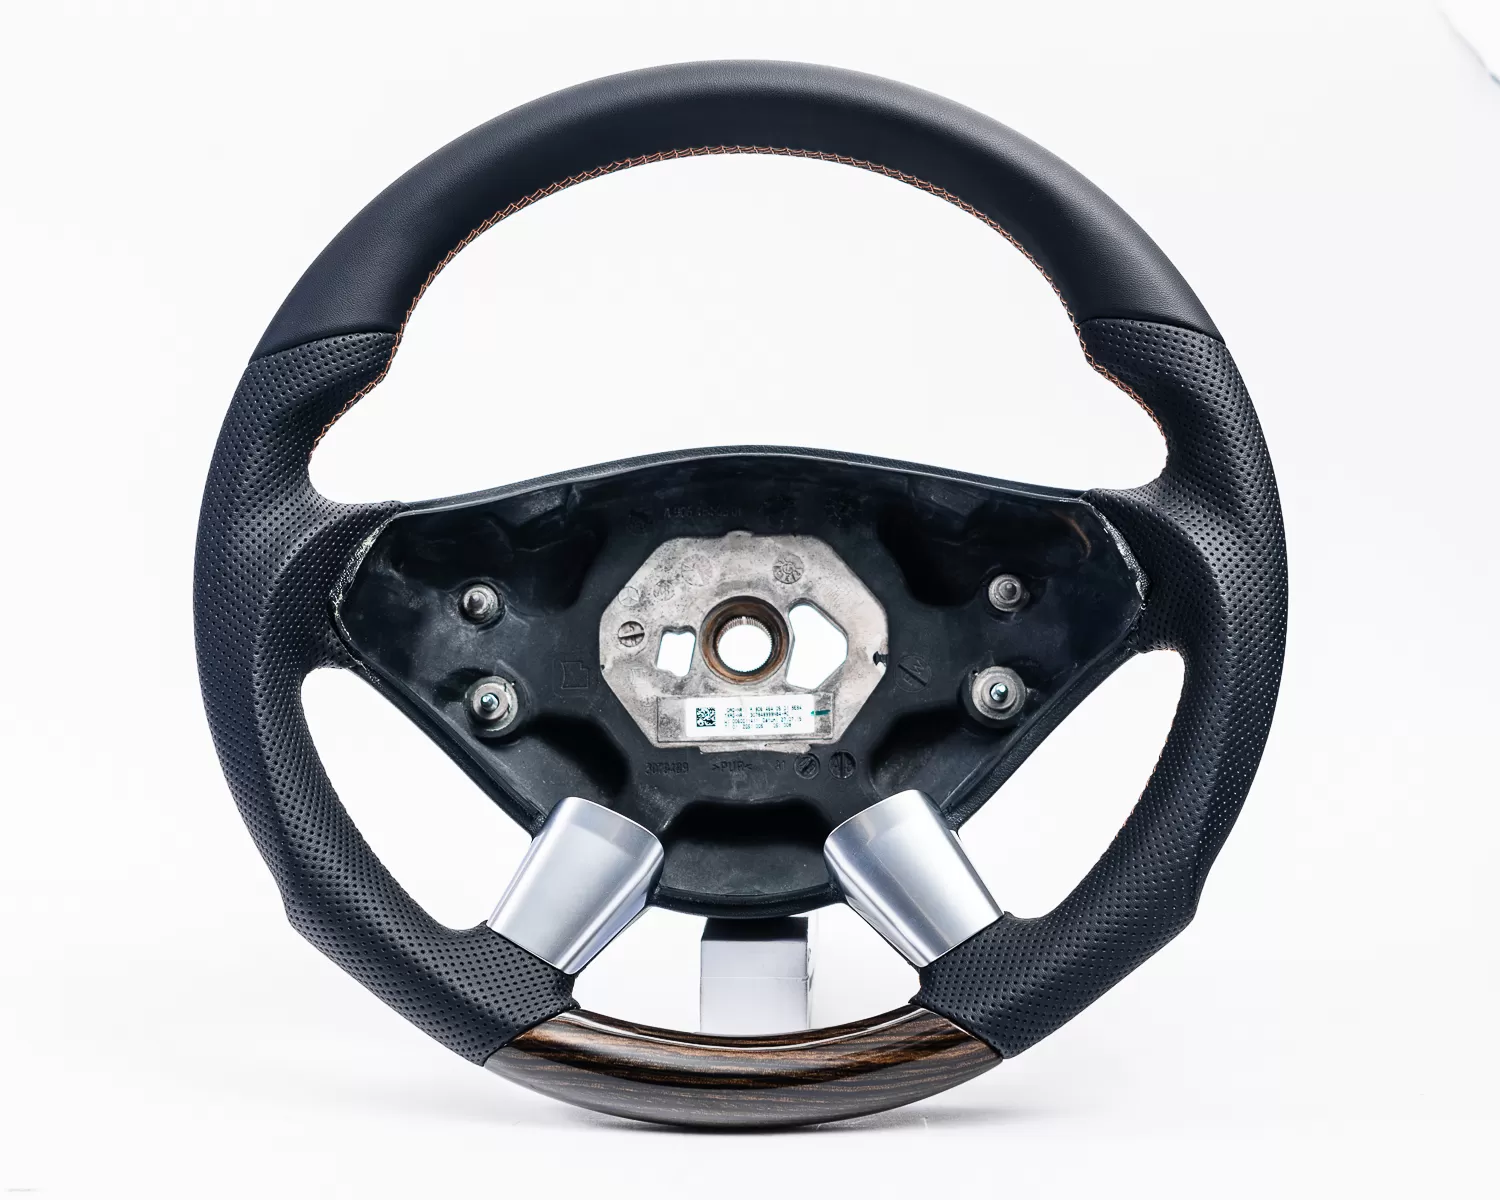 Mercedes Sprinter Van | RV OEM Upgraded Customized Steering Wheel - VR-MERC-SPRT-STRWL